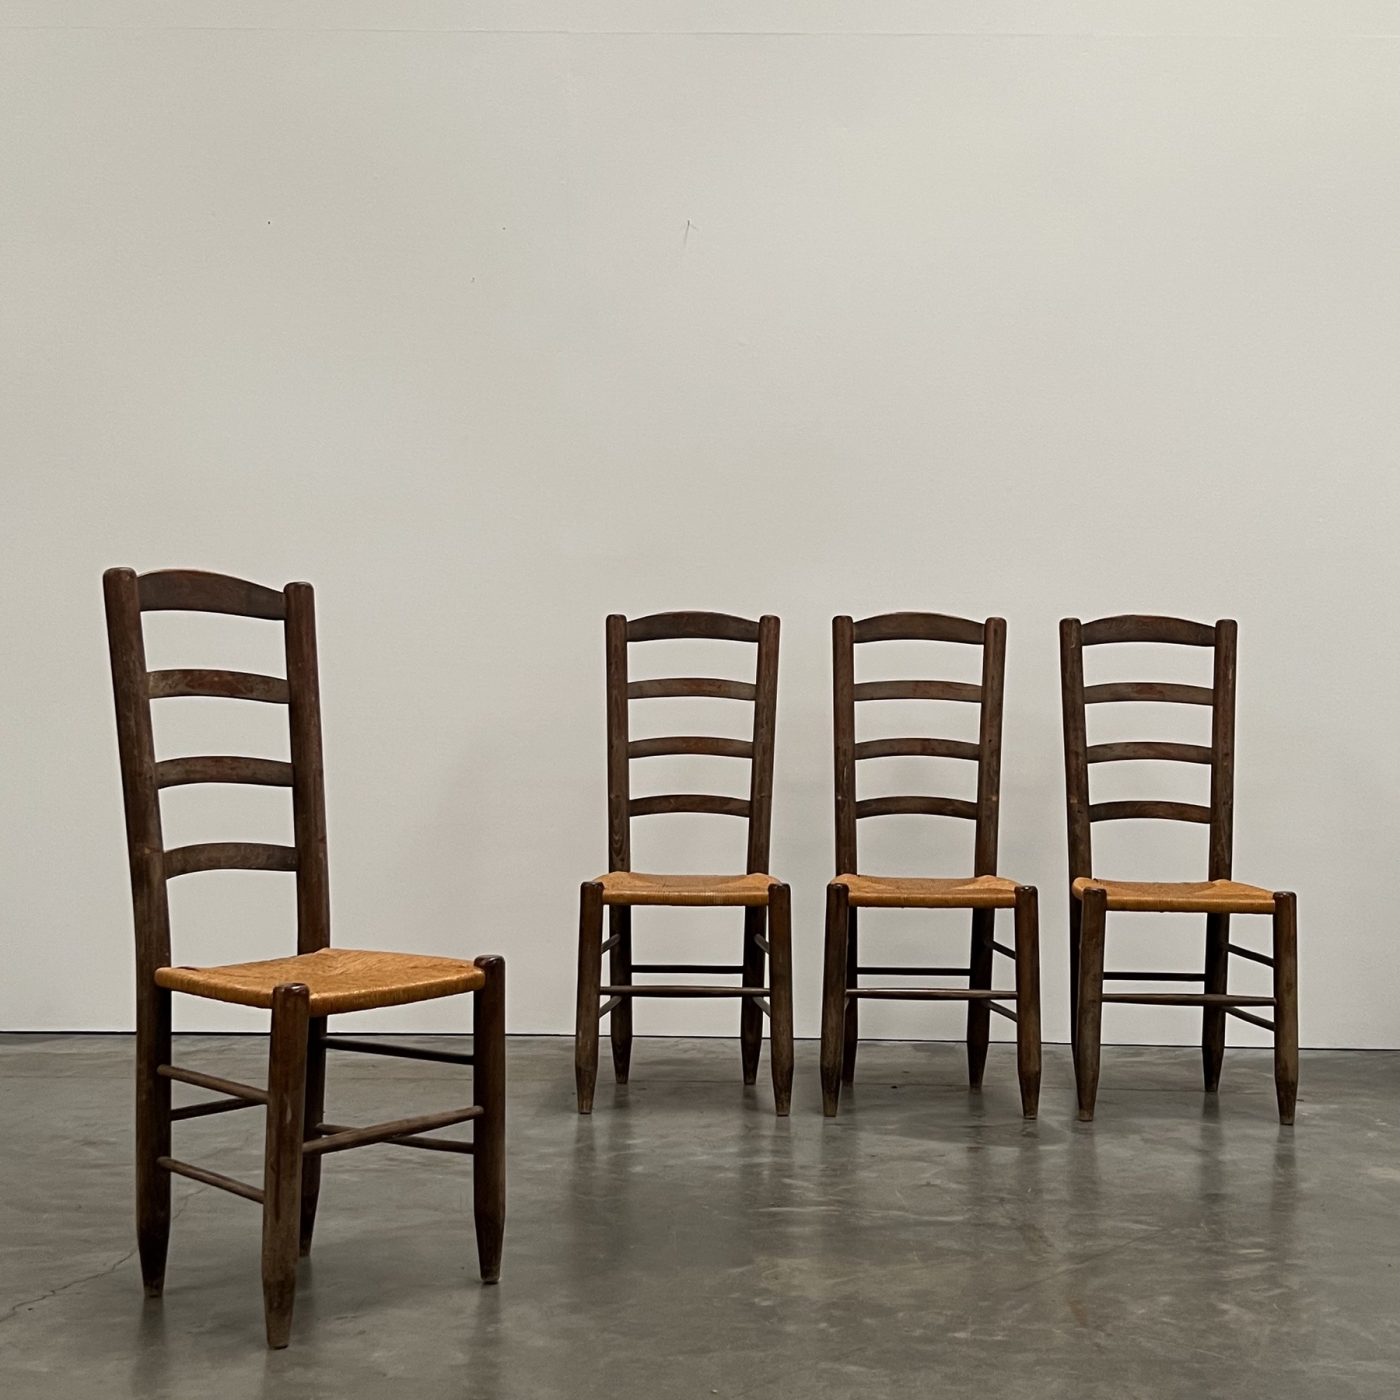 objet-vagabond-chairs0000